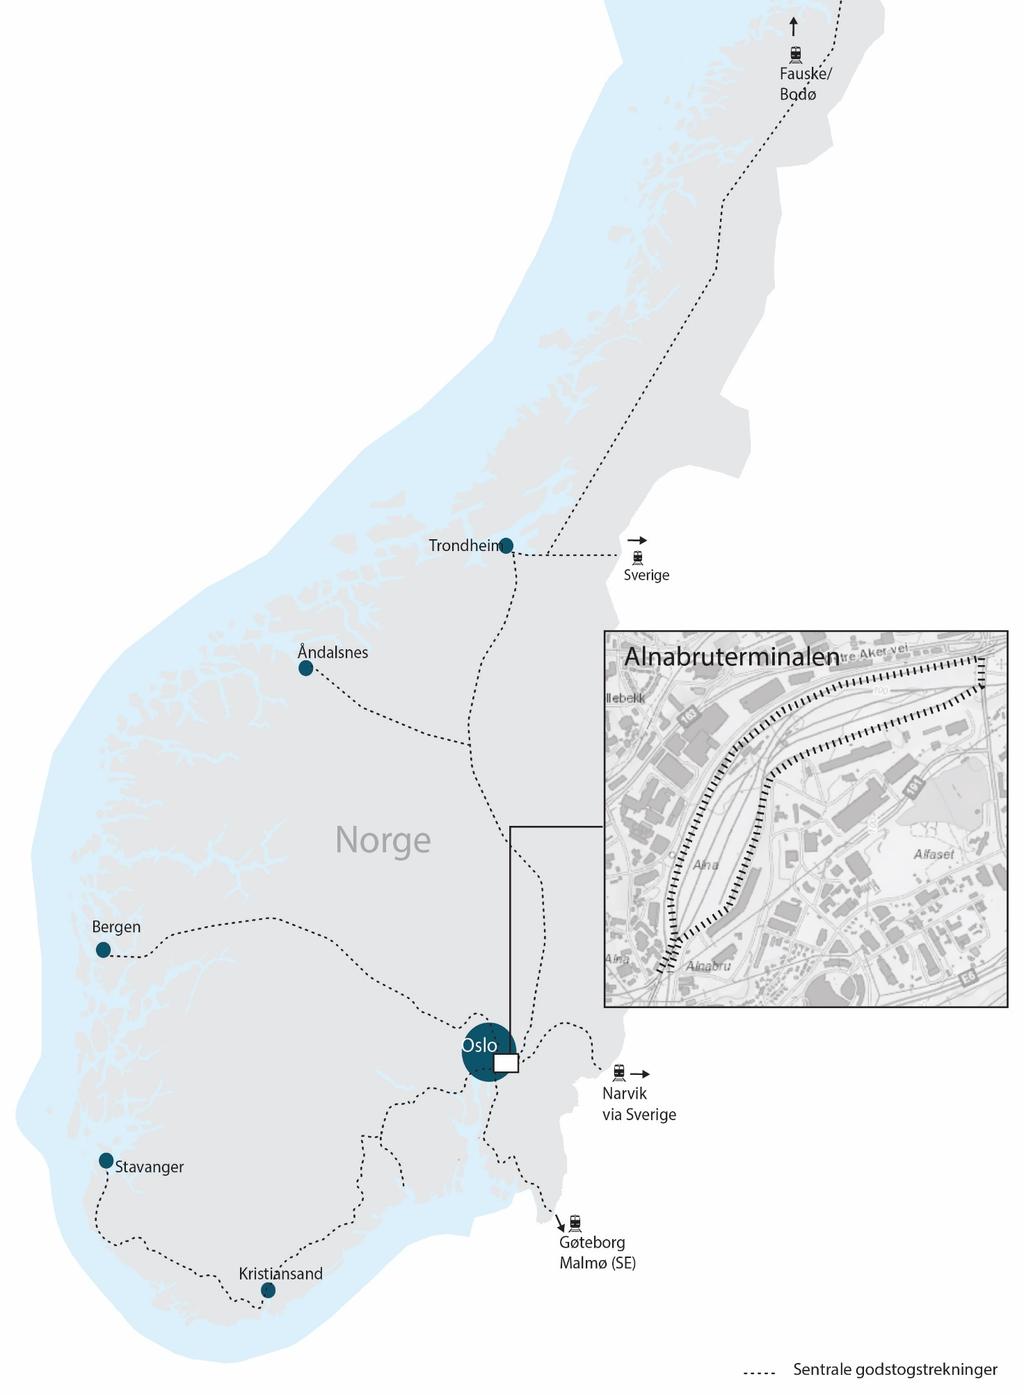 INNLEDNING Figur 1-1 Alnabruterminalens beliggenhet i Norge og Oslo,